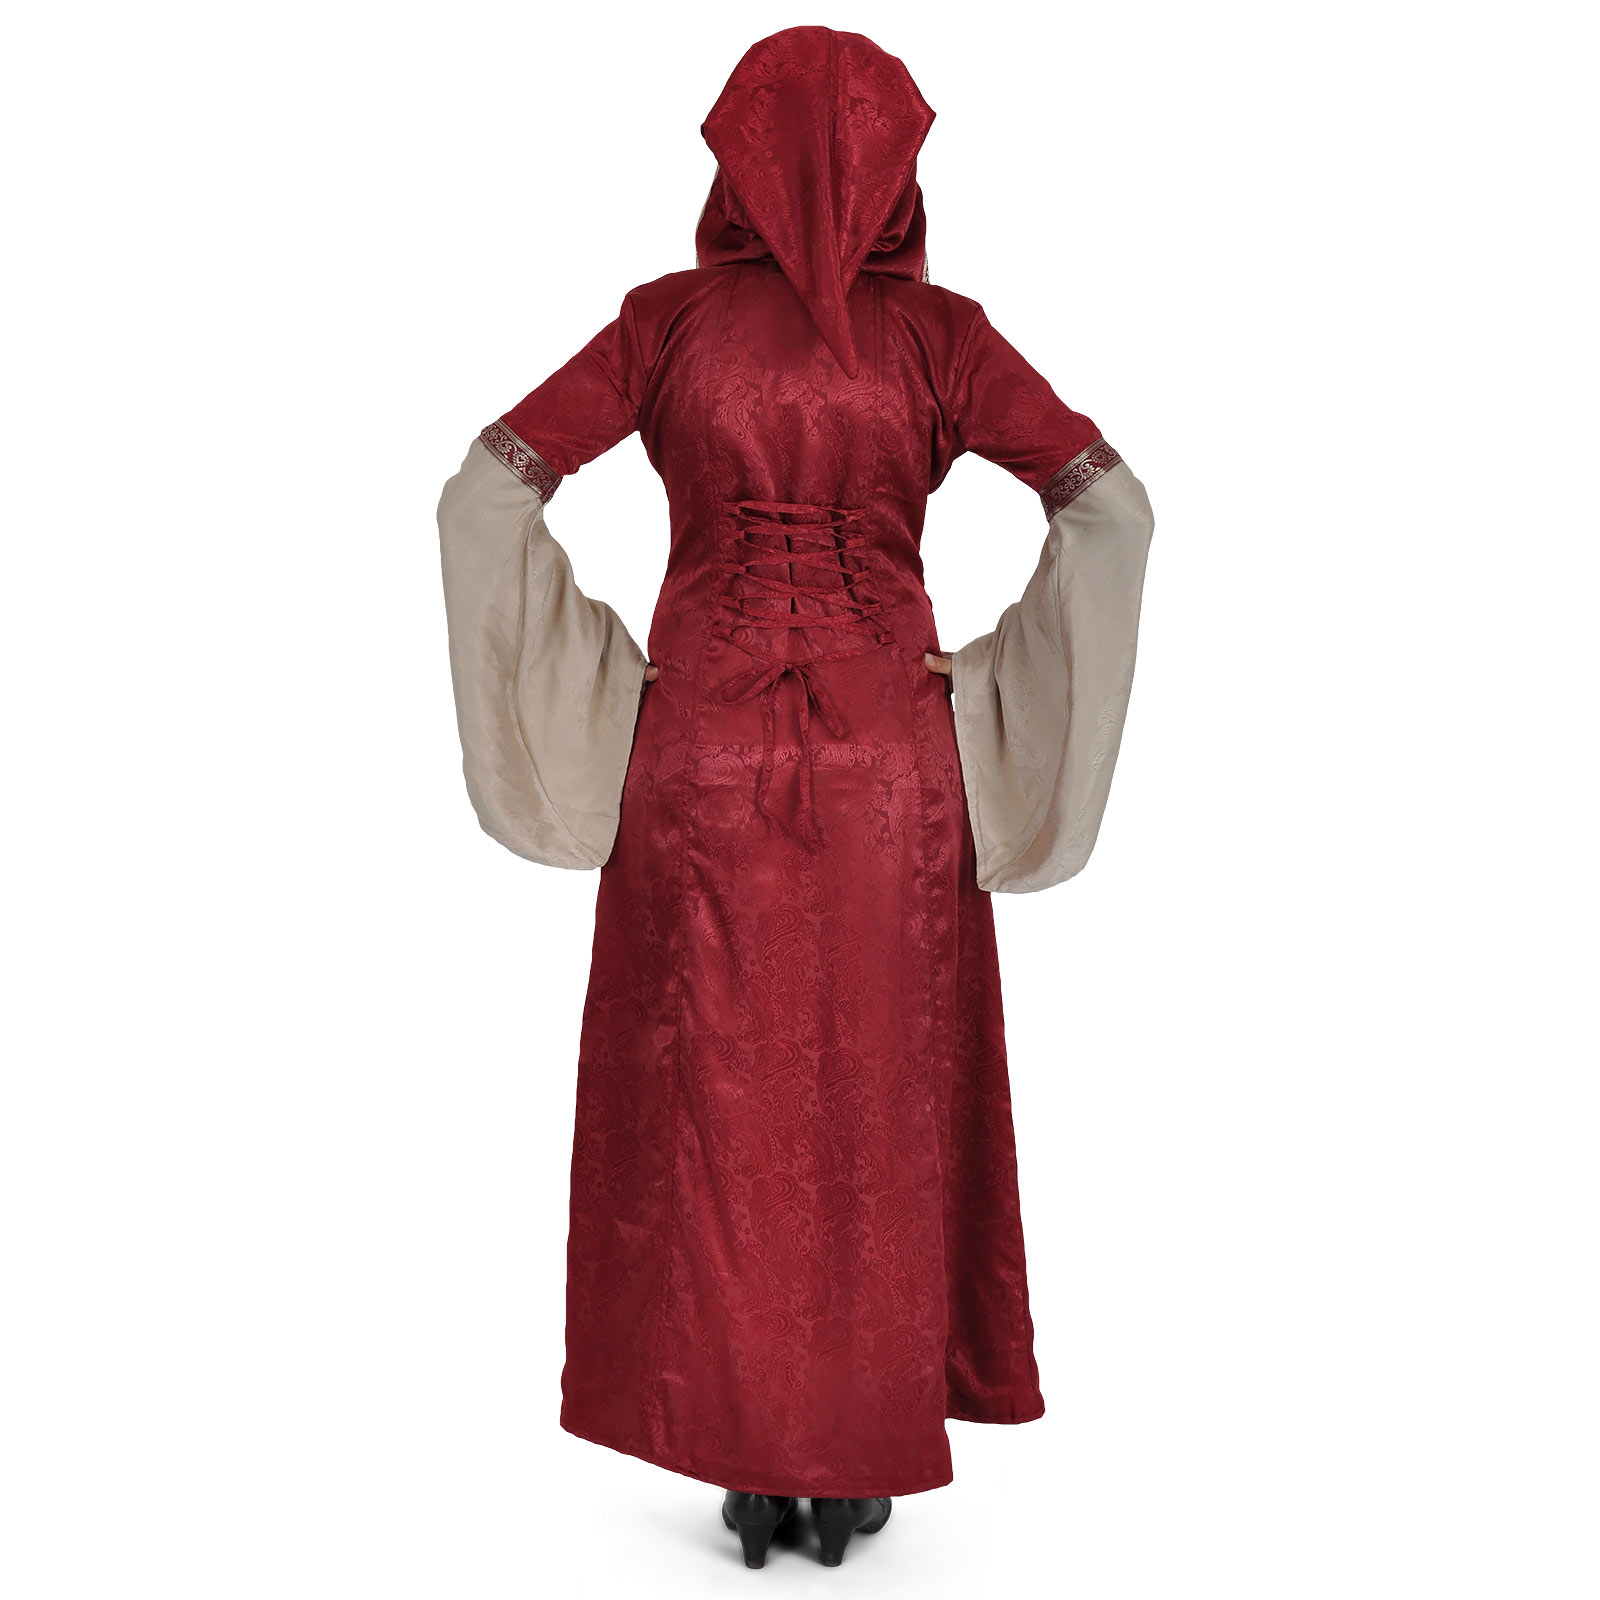 Luise - medieval dress